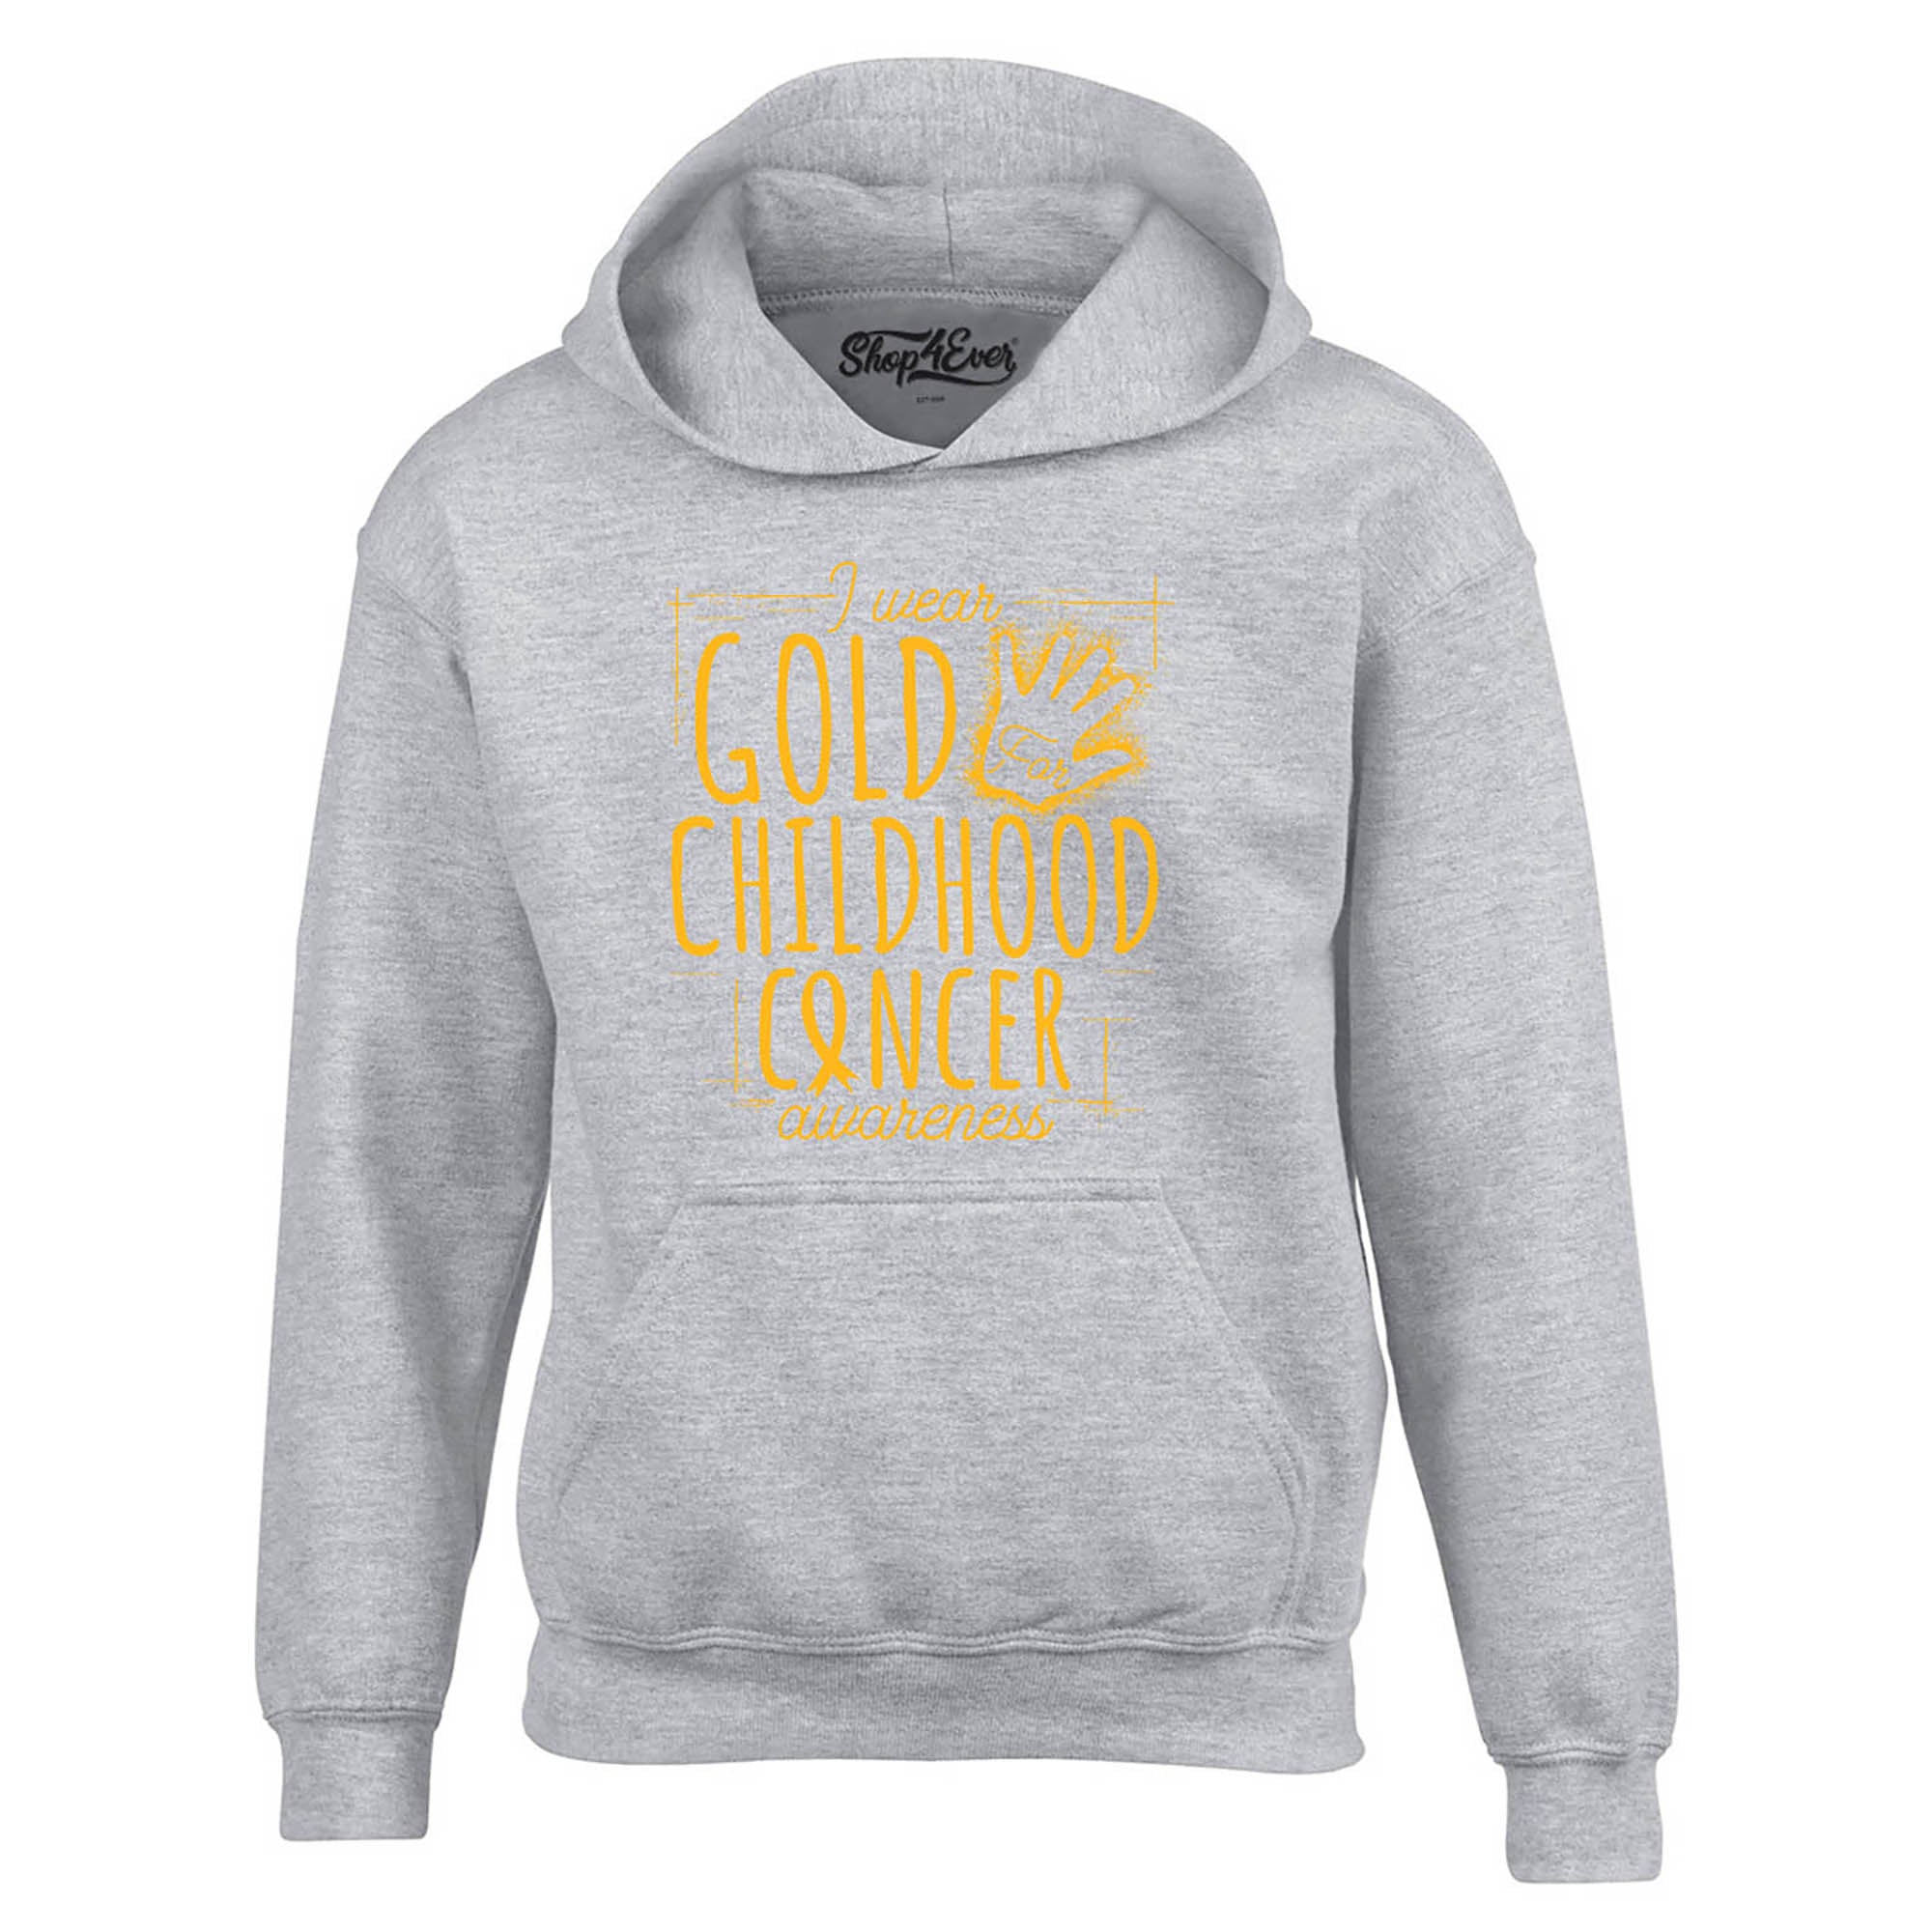 I Wear Gold for Childhood Cancer Awareness Hoodie Sweatshirts